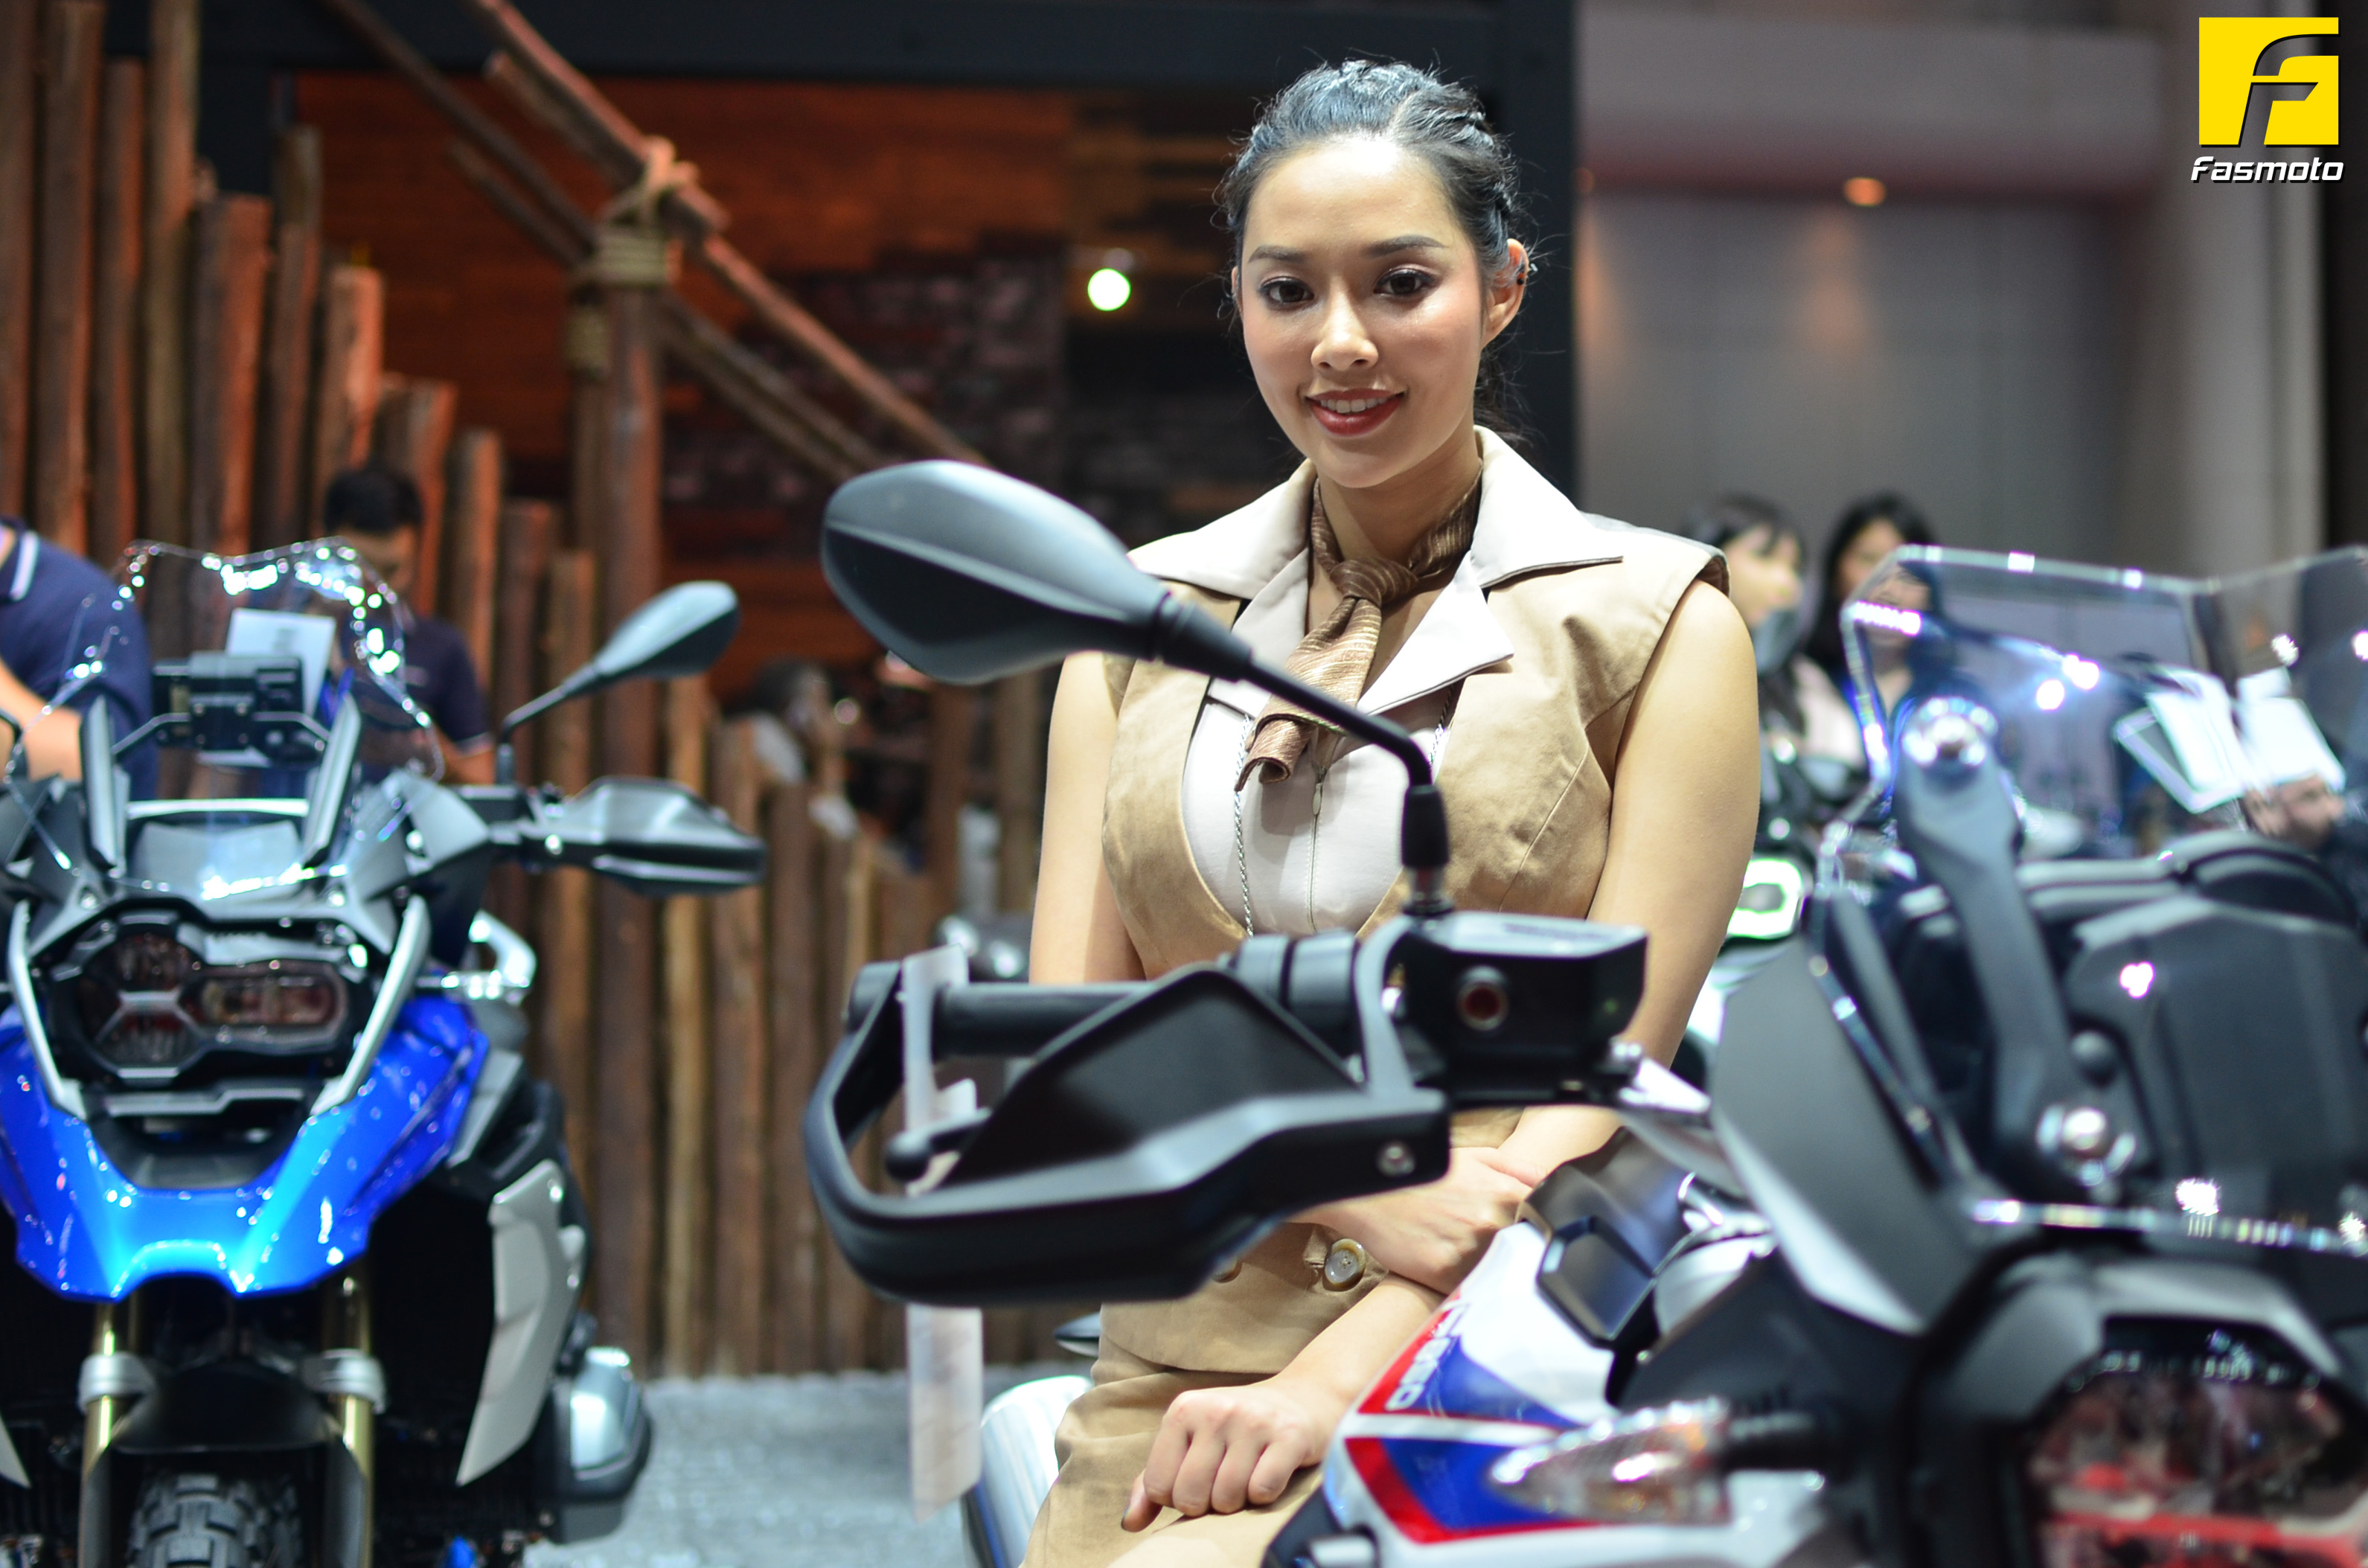 The Bangkok Motor Show 2019 - Show Girls - BMW Motorrad